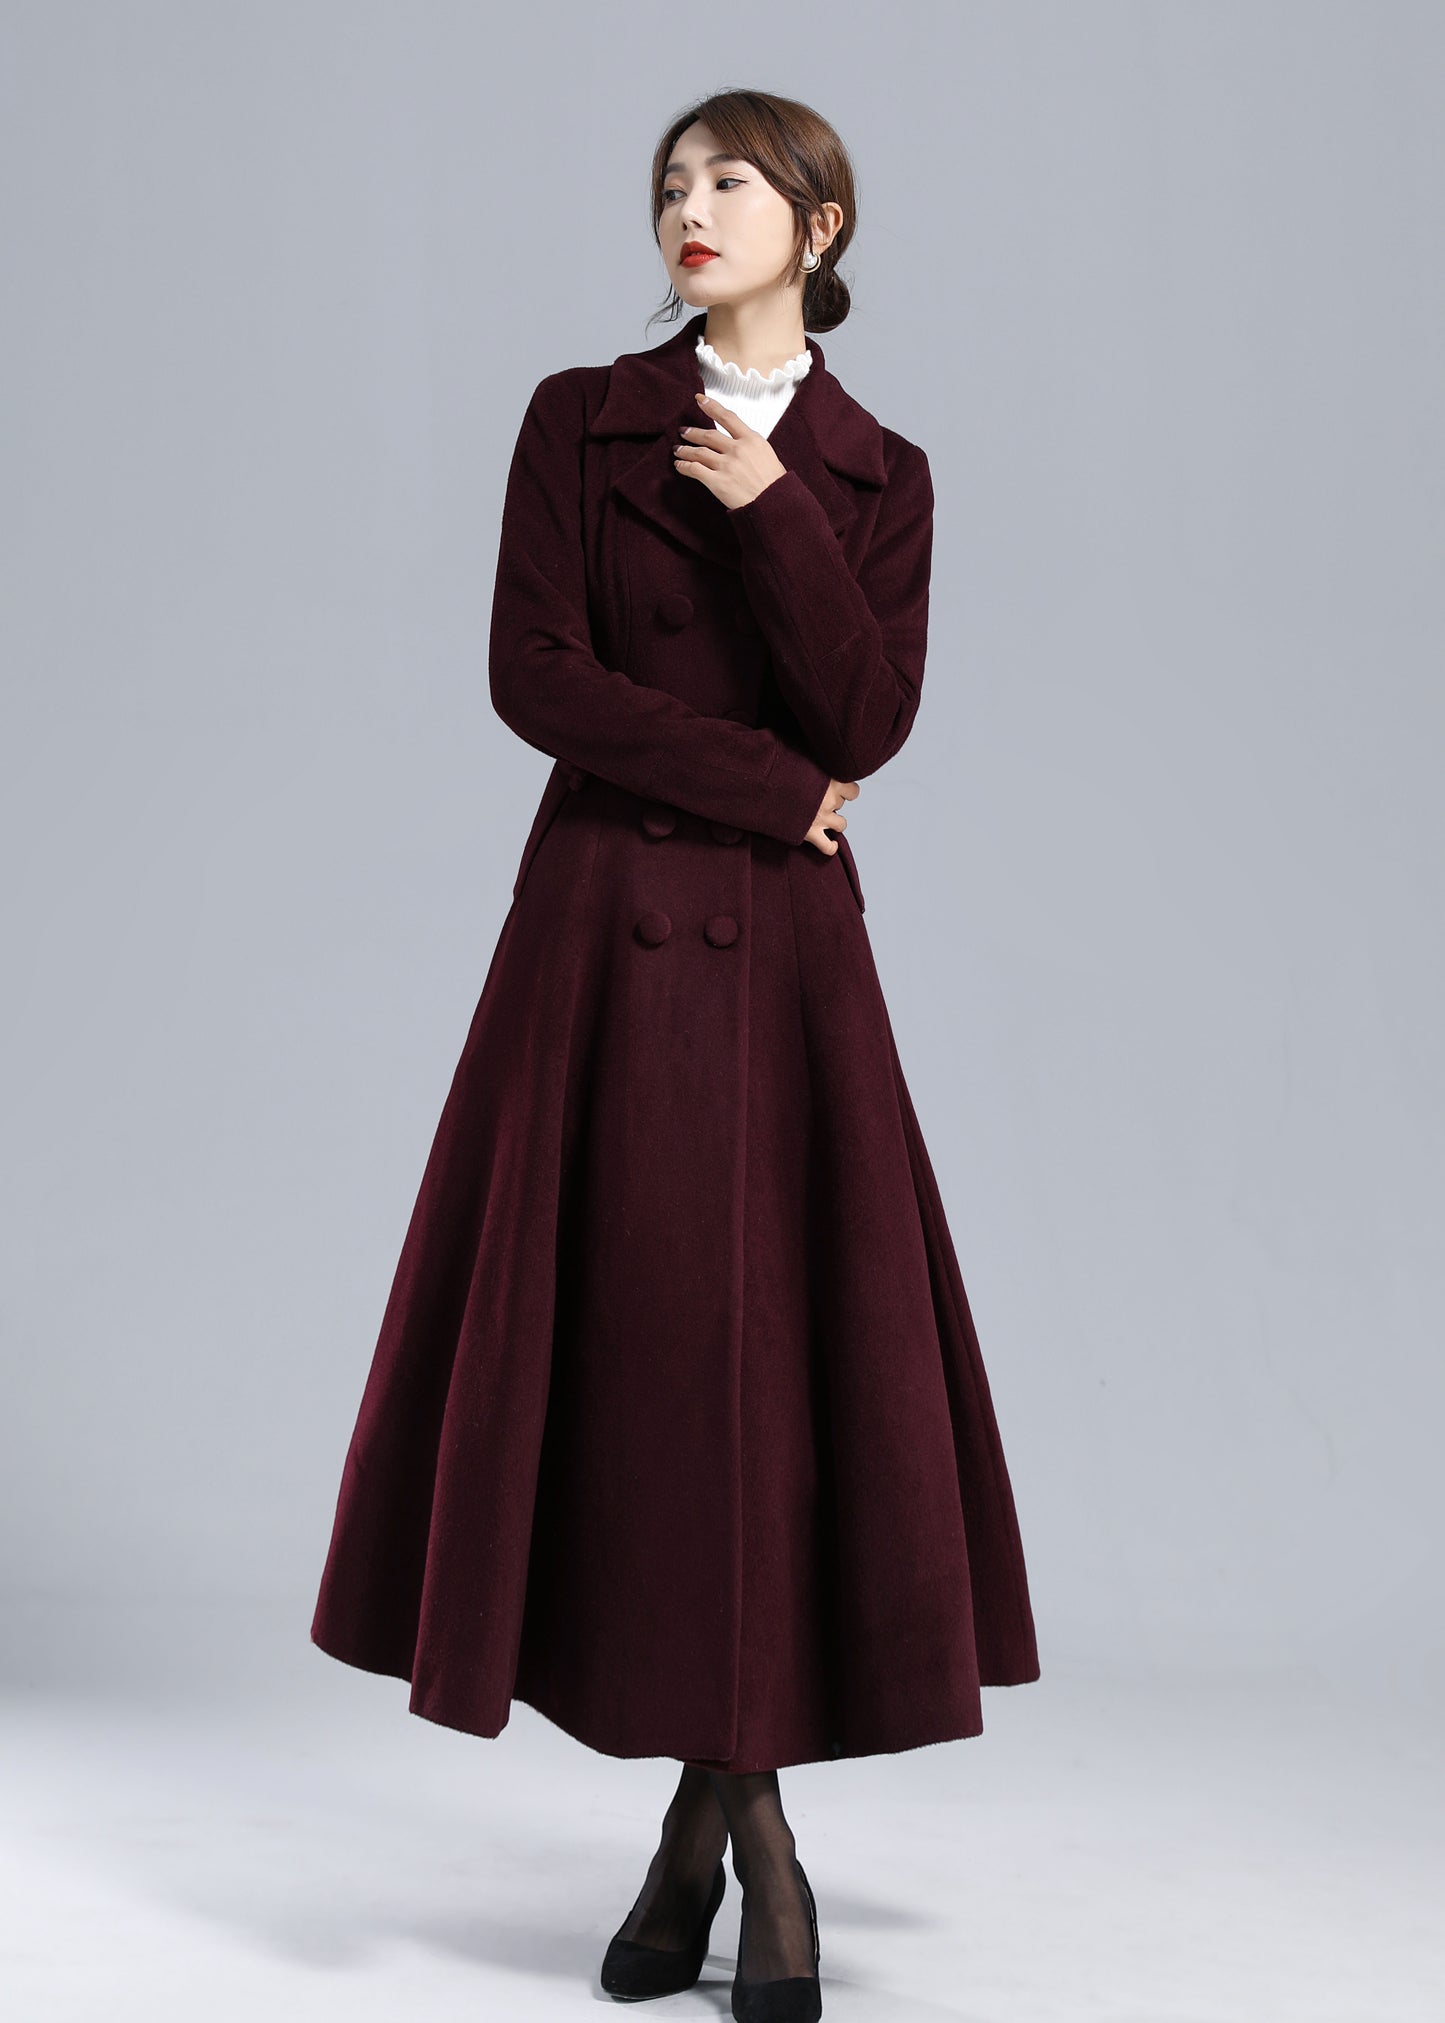 Burgundy wool coat, 1950s Long Wool Princess Coat 3239